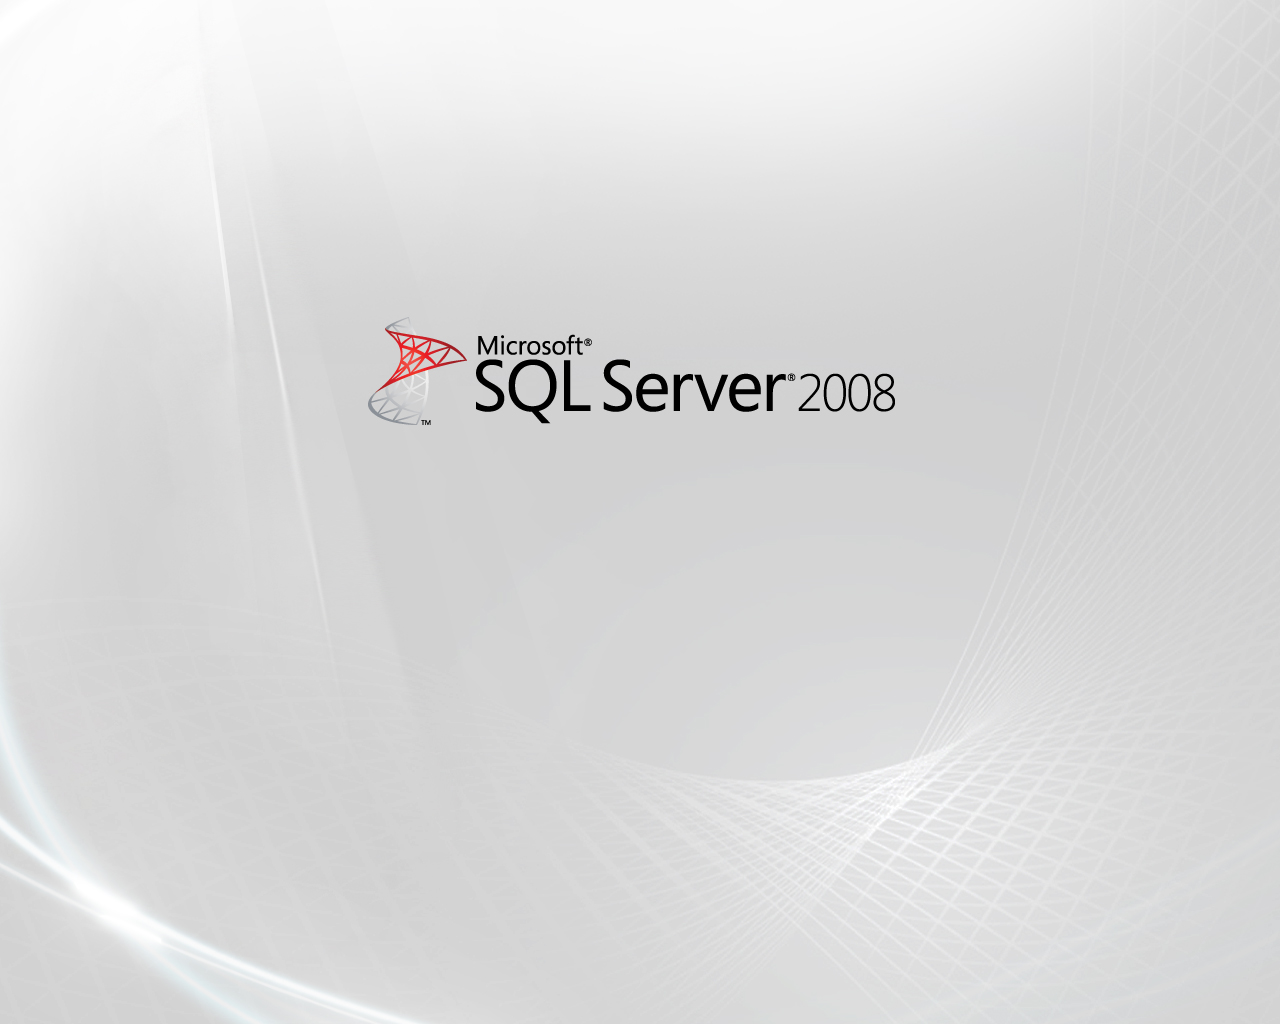 Official SQL Server 2008 wallpaper and screensaver Redmond Pie